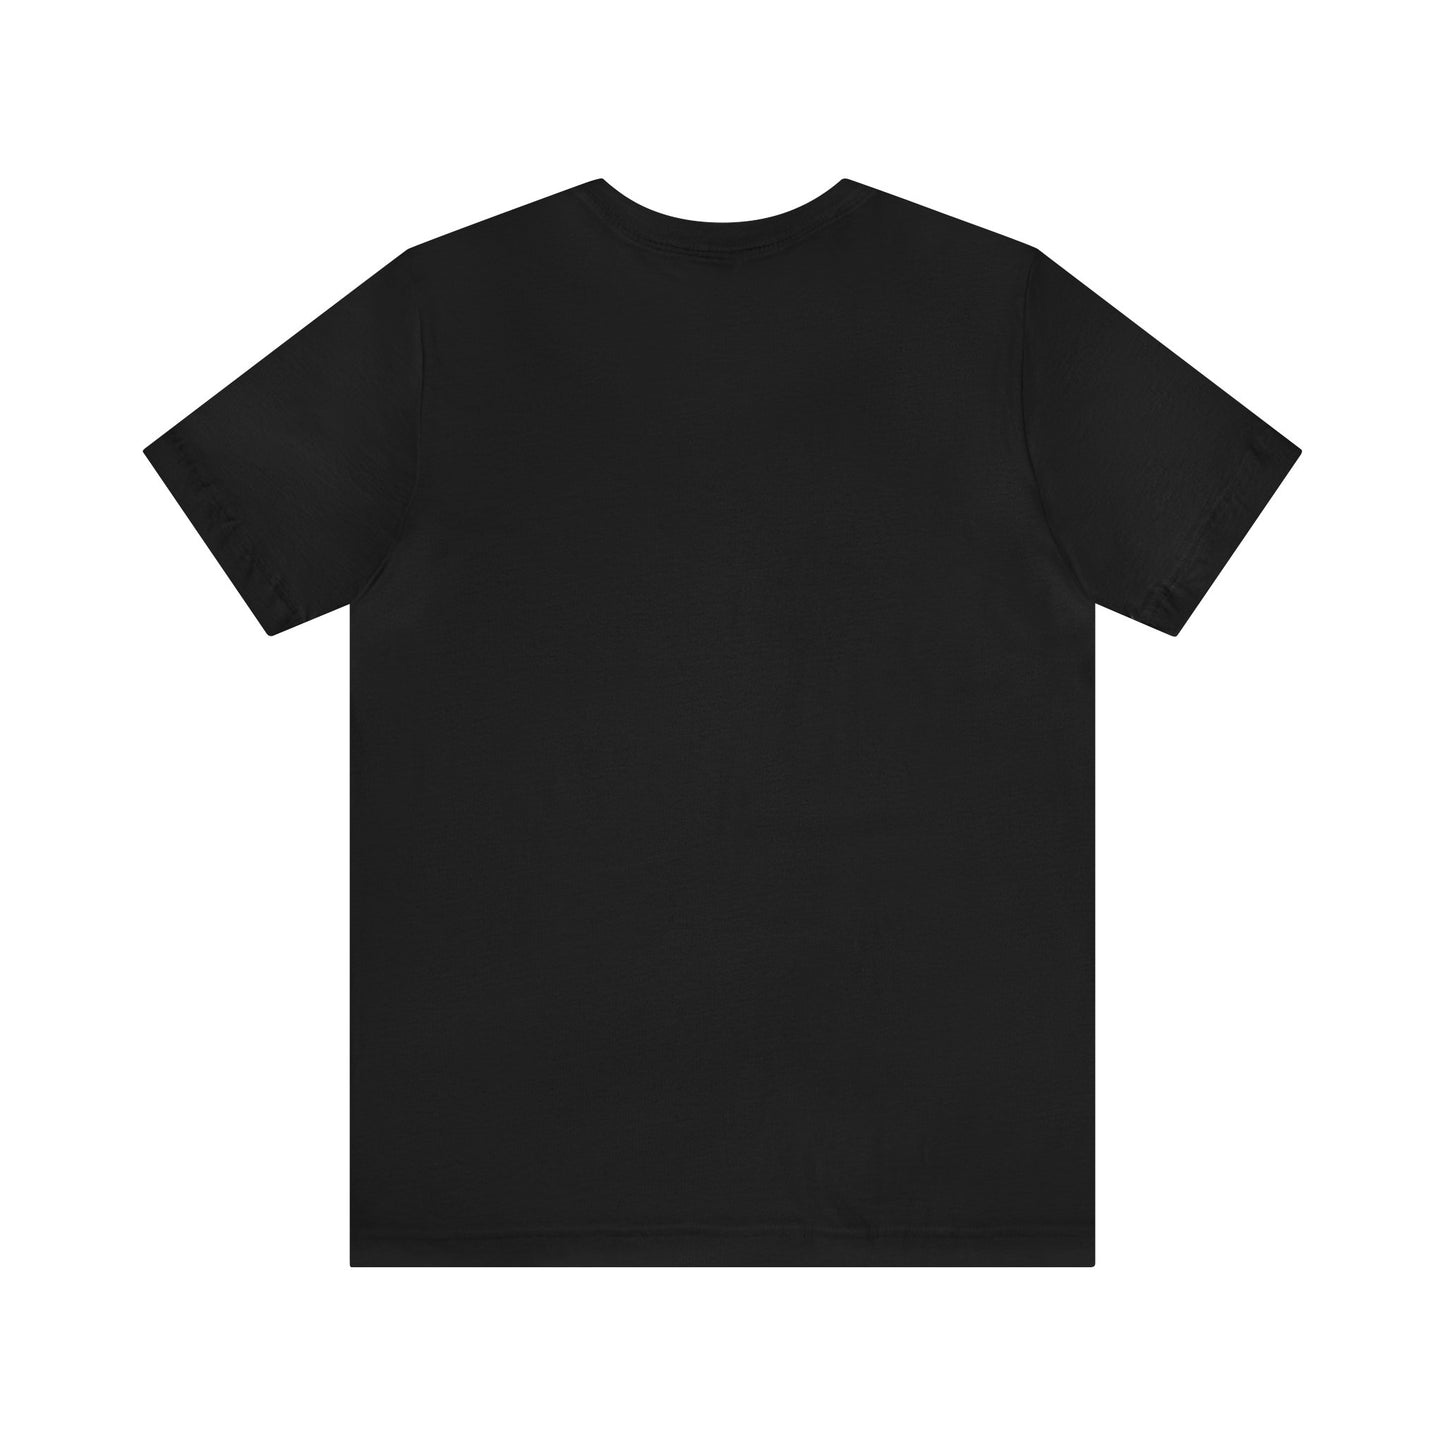 Dual Analog White Logo T-Shirt - Black